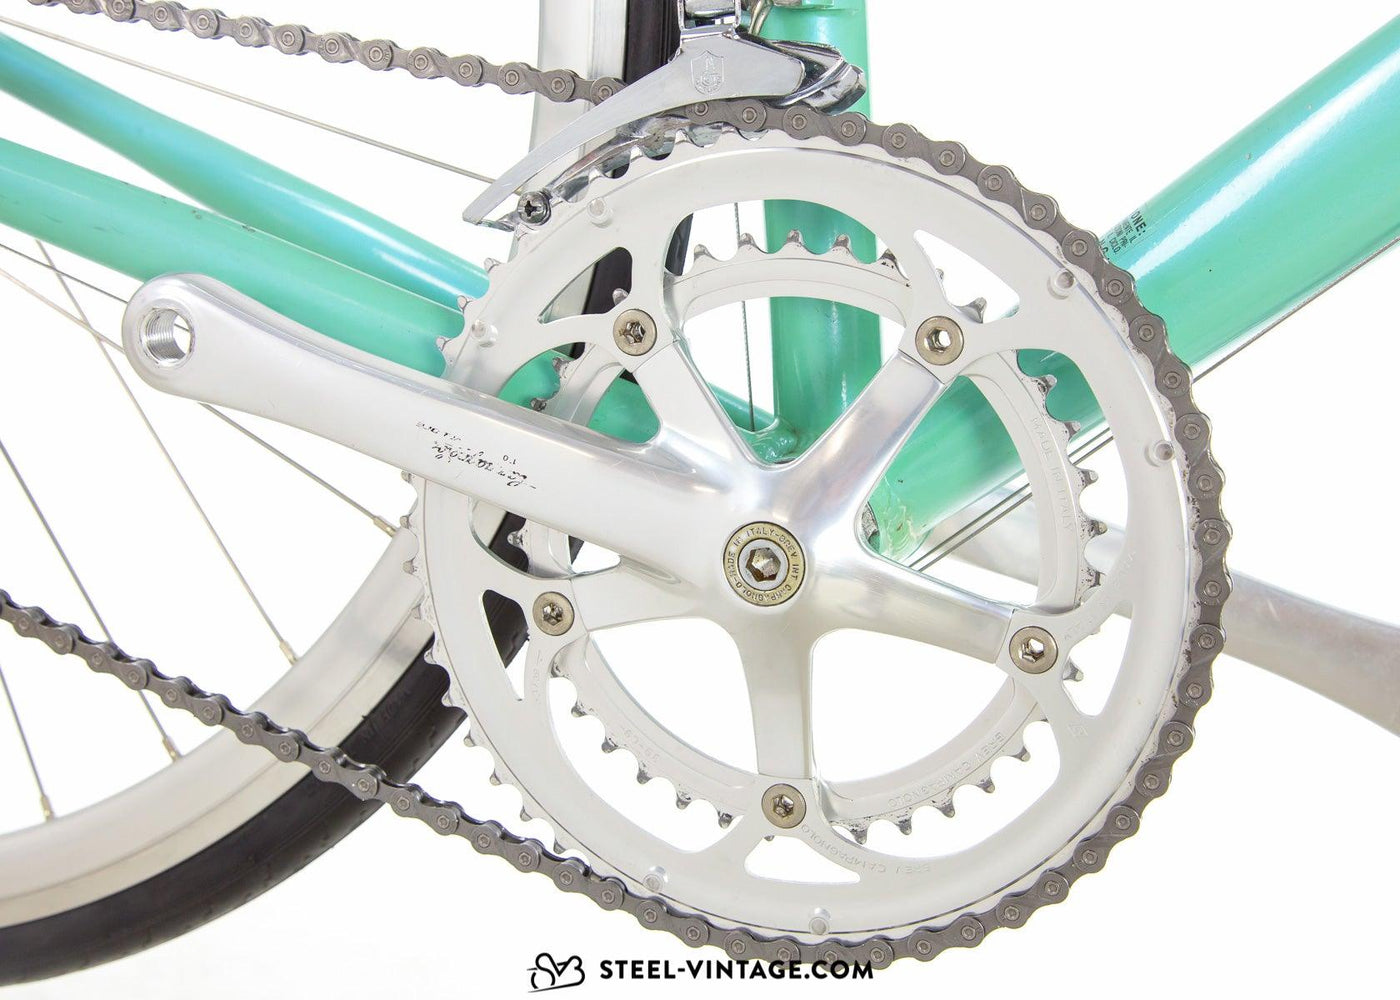 Bianchi Gold Race Team Road Bike 2000 - Steel Vintage Bikes